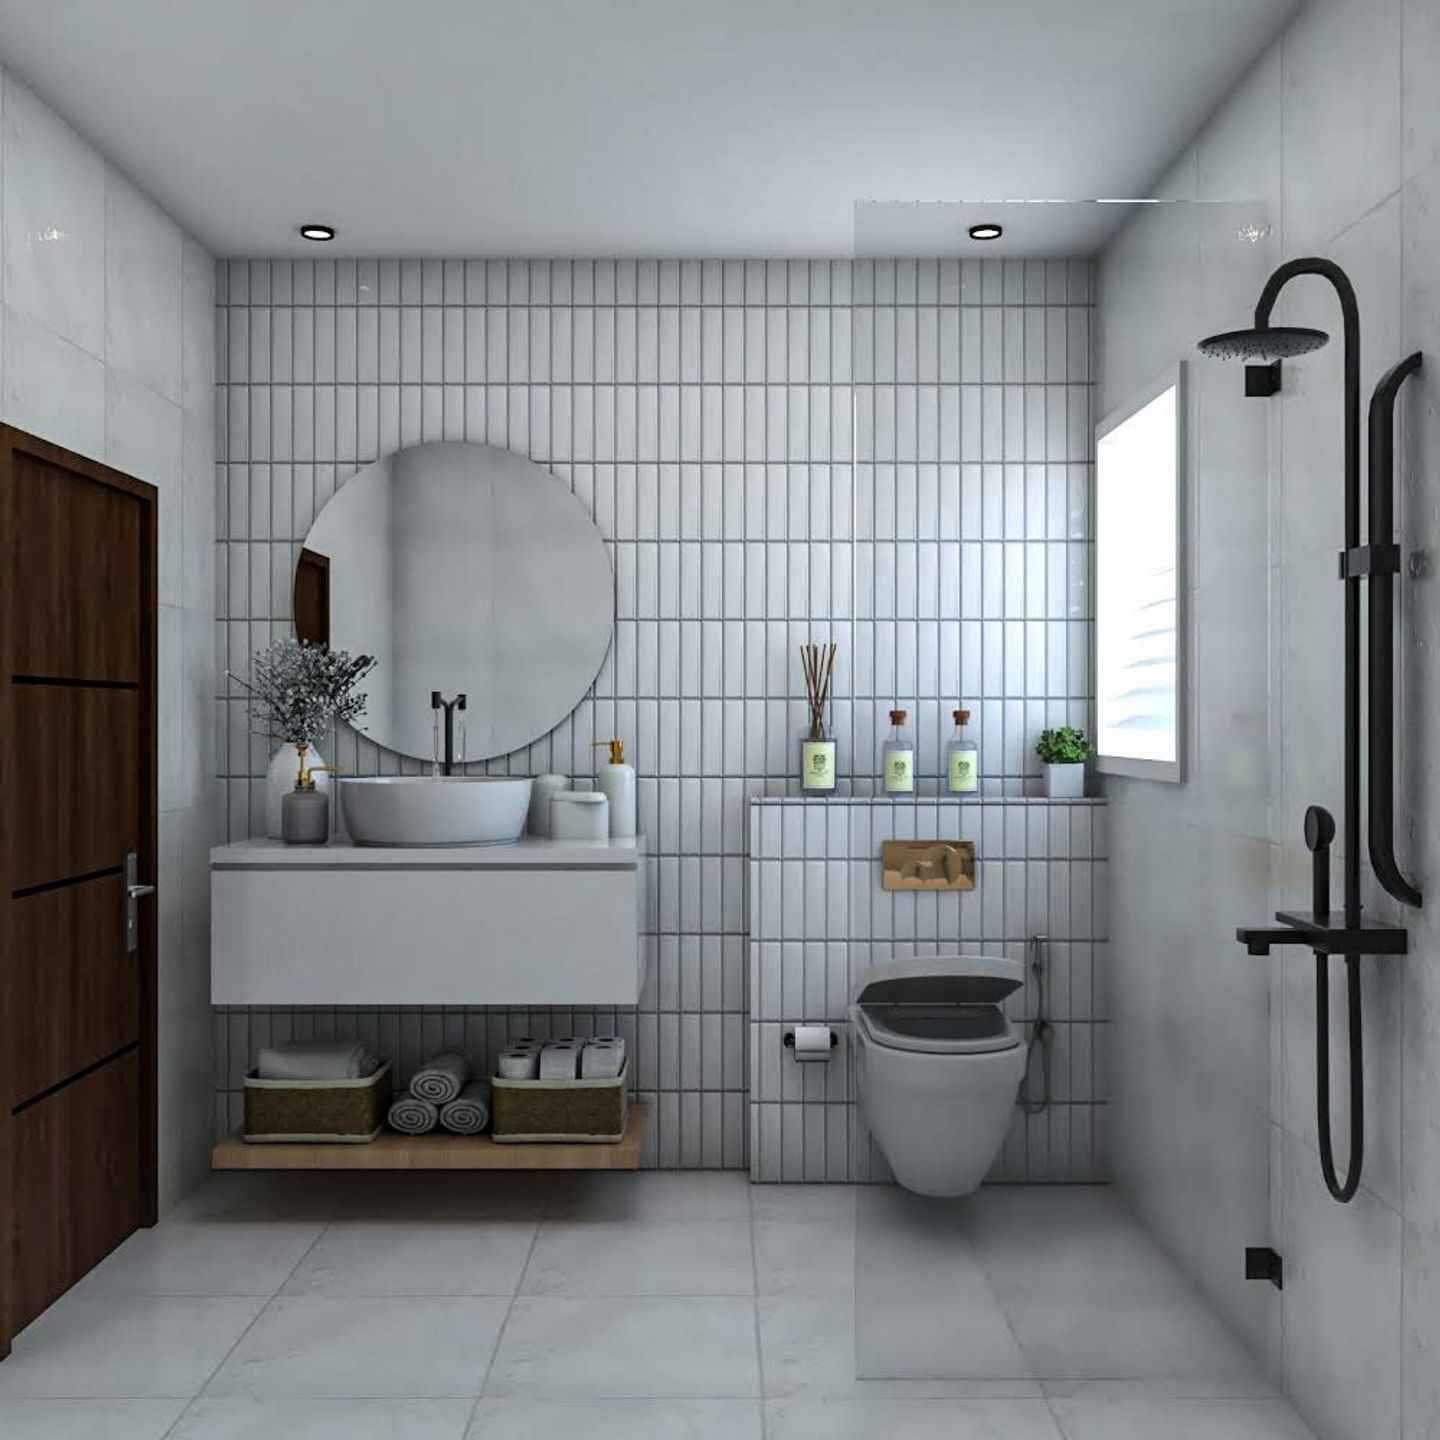 Bathroom Design With Open Ledges - Livspace